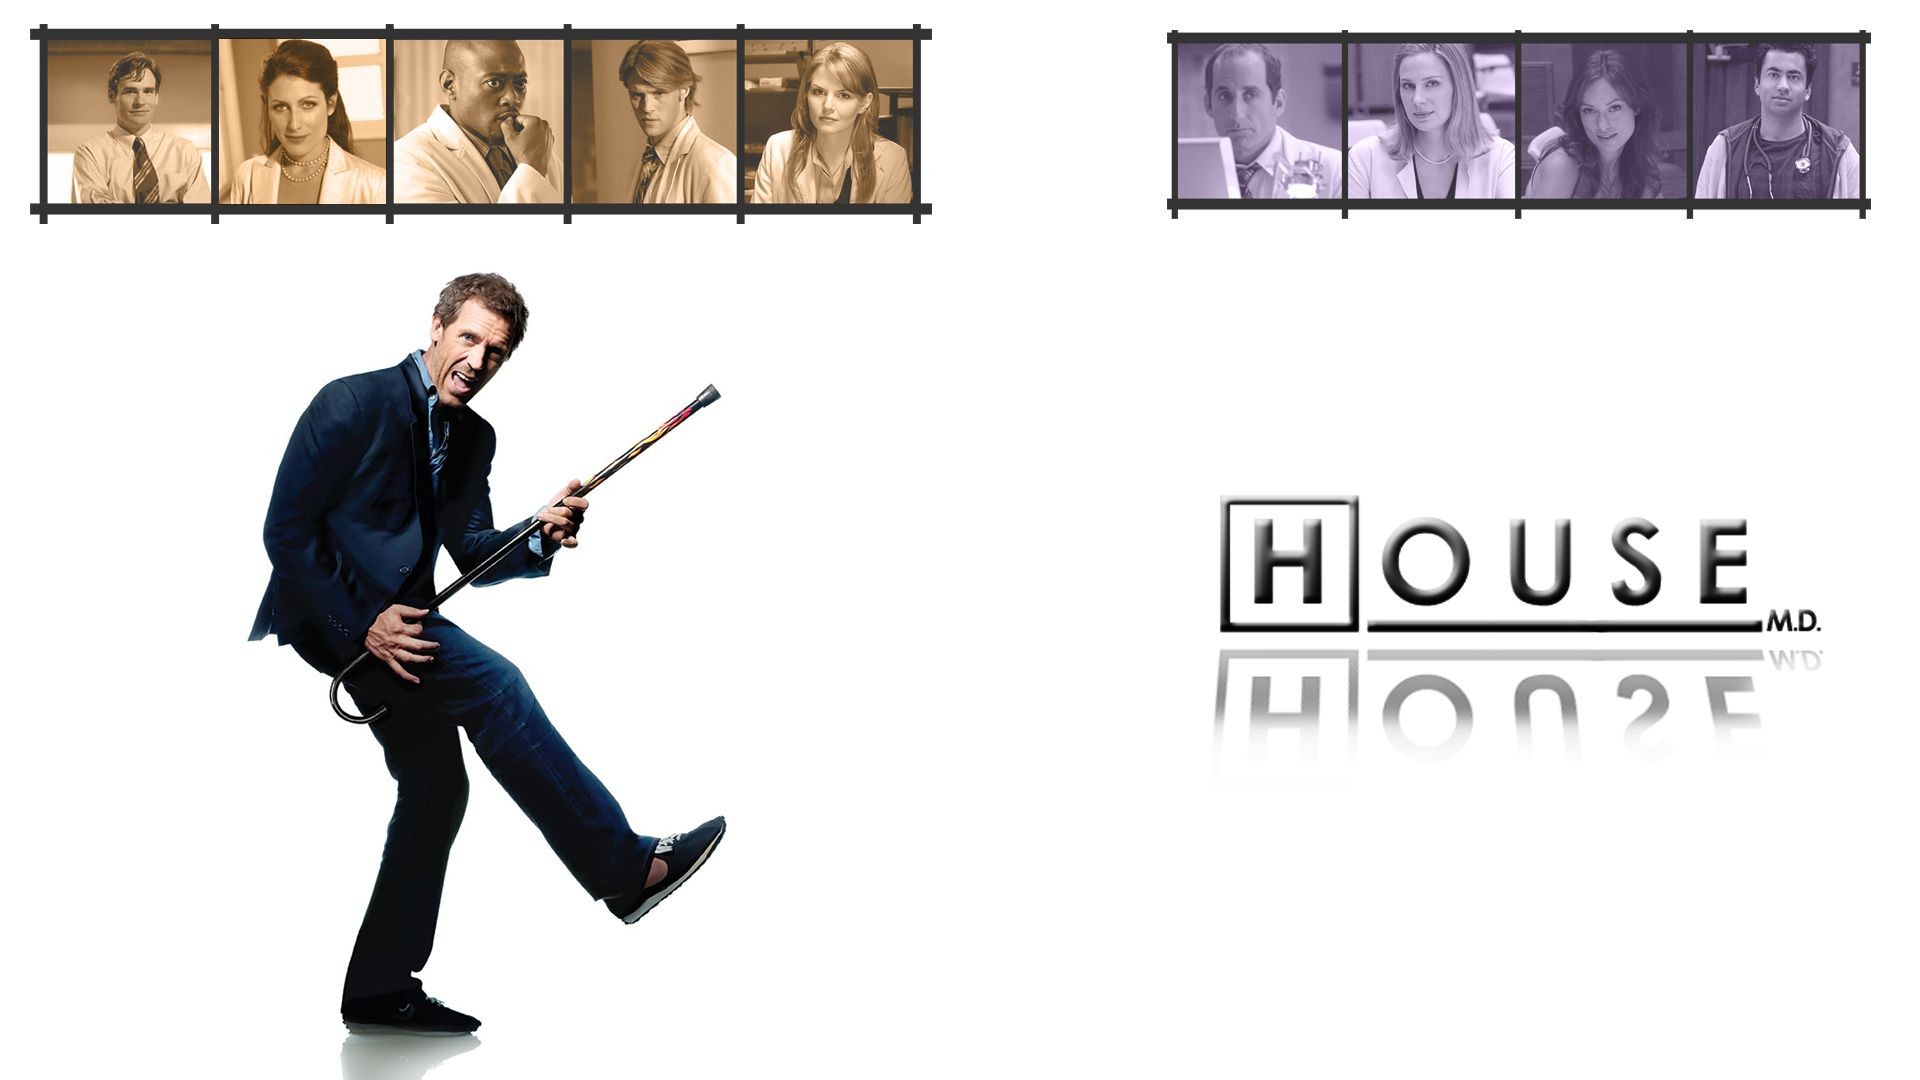 People 1920x1080 House, M.D. Hugh Laurie Jennifer Morrison Olivia Wilde TV series simple background white background men